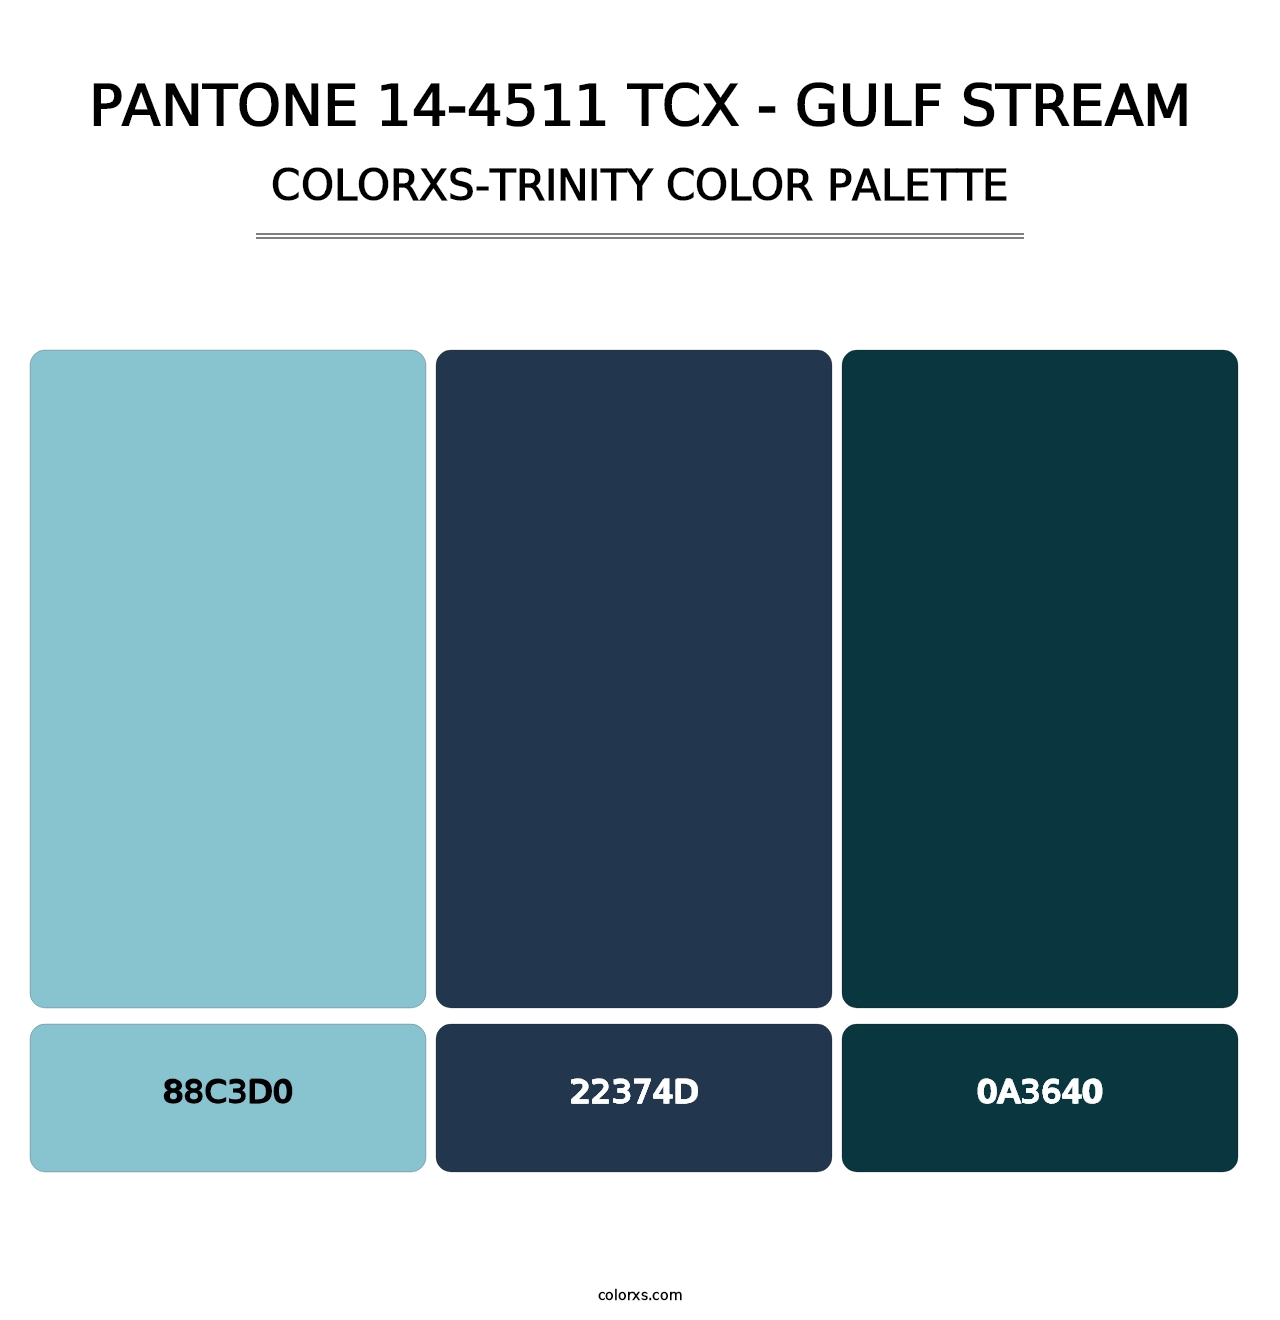 PANTONE 14-4511 TCX - Gulf Stream - Colorxs Trinity Palette